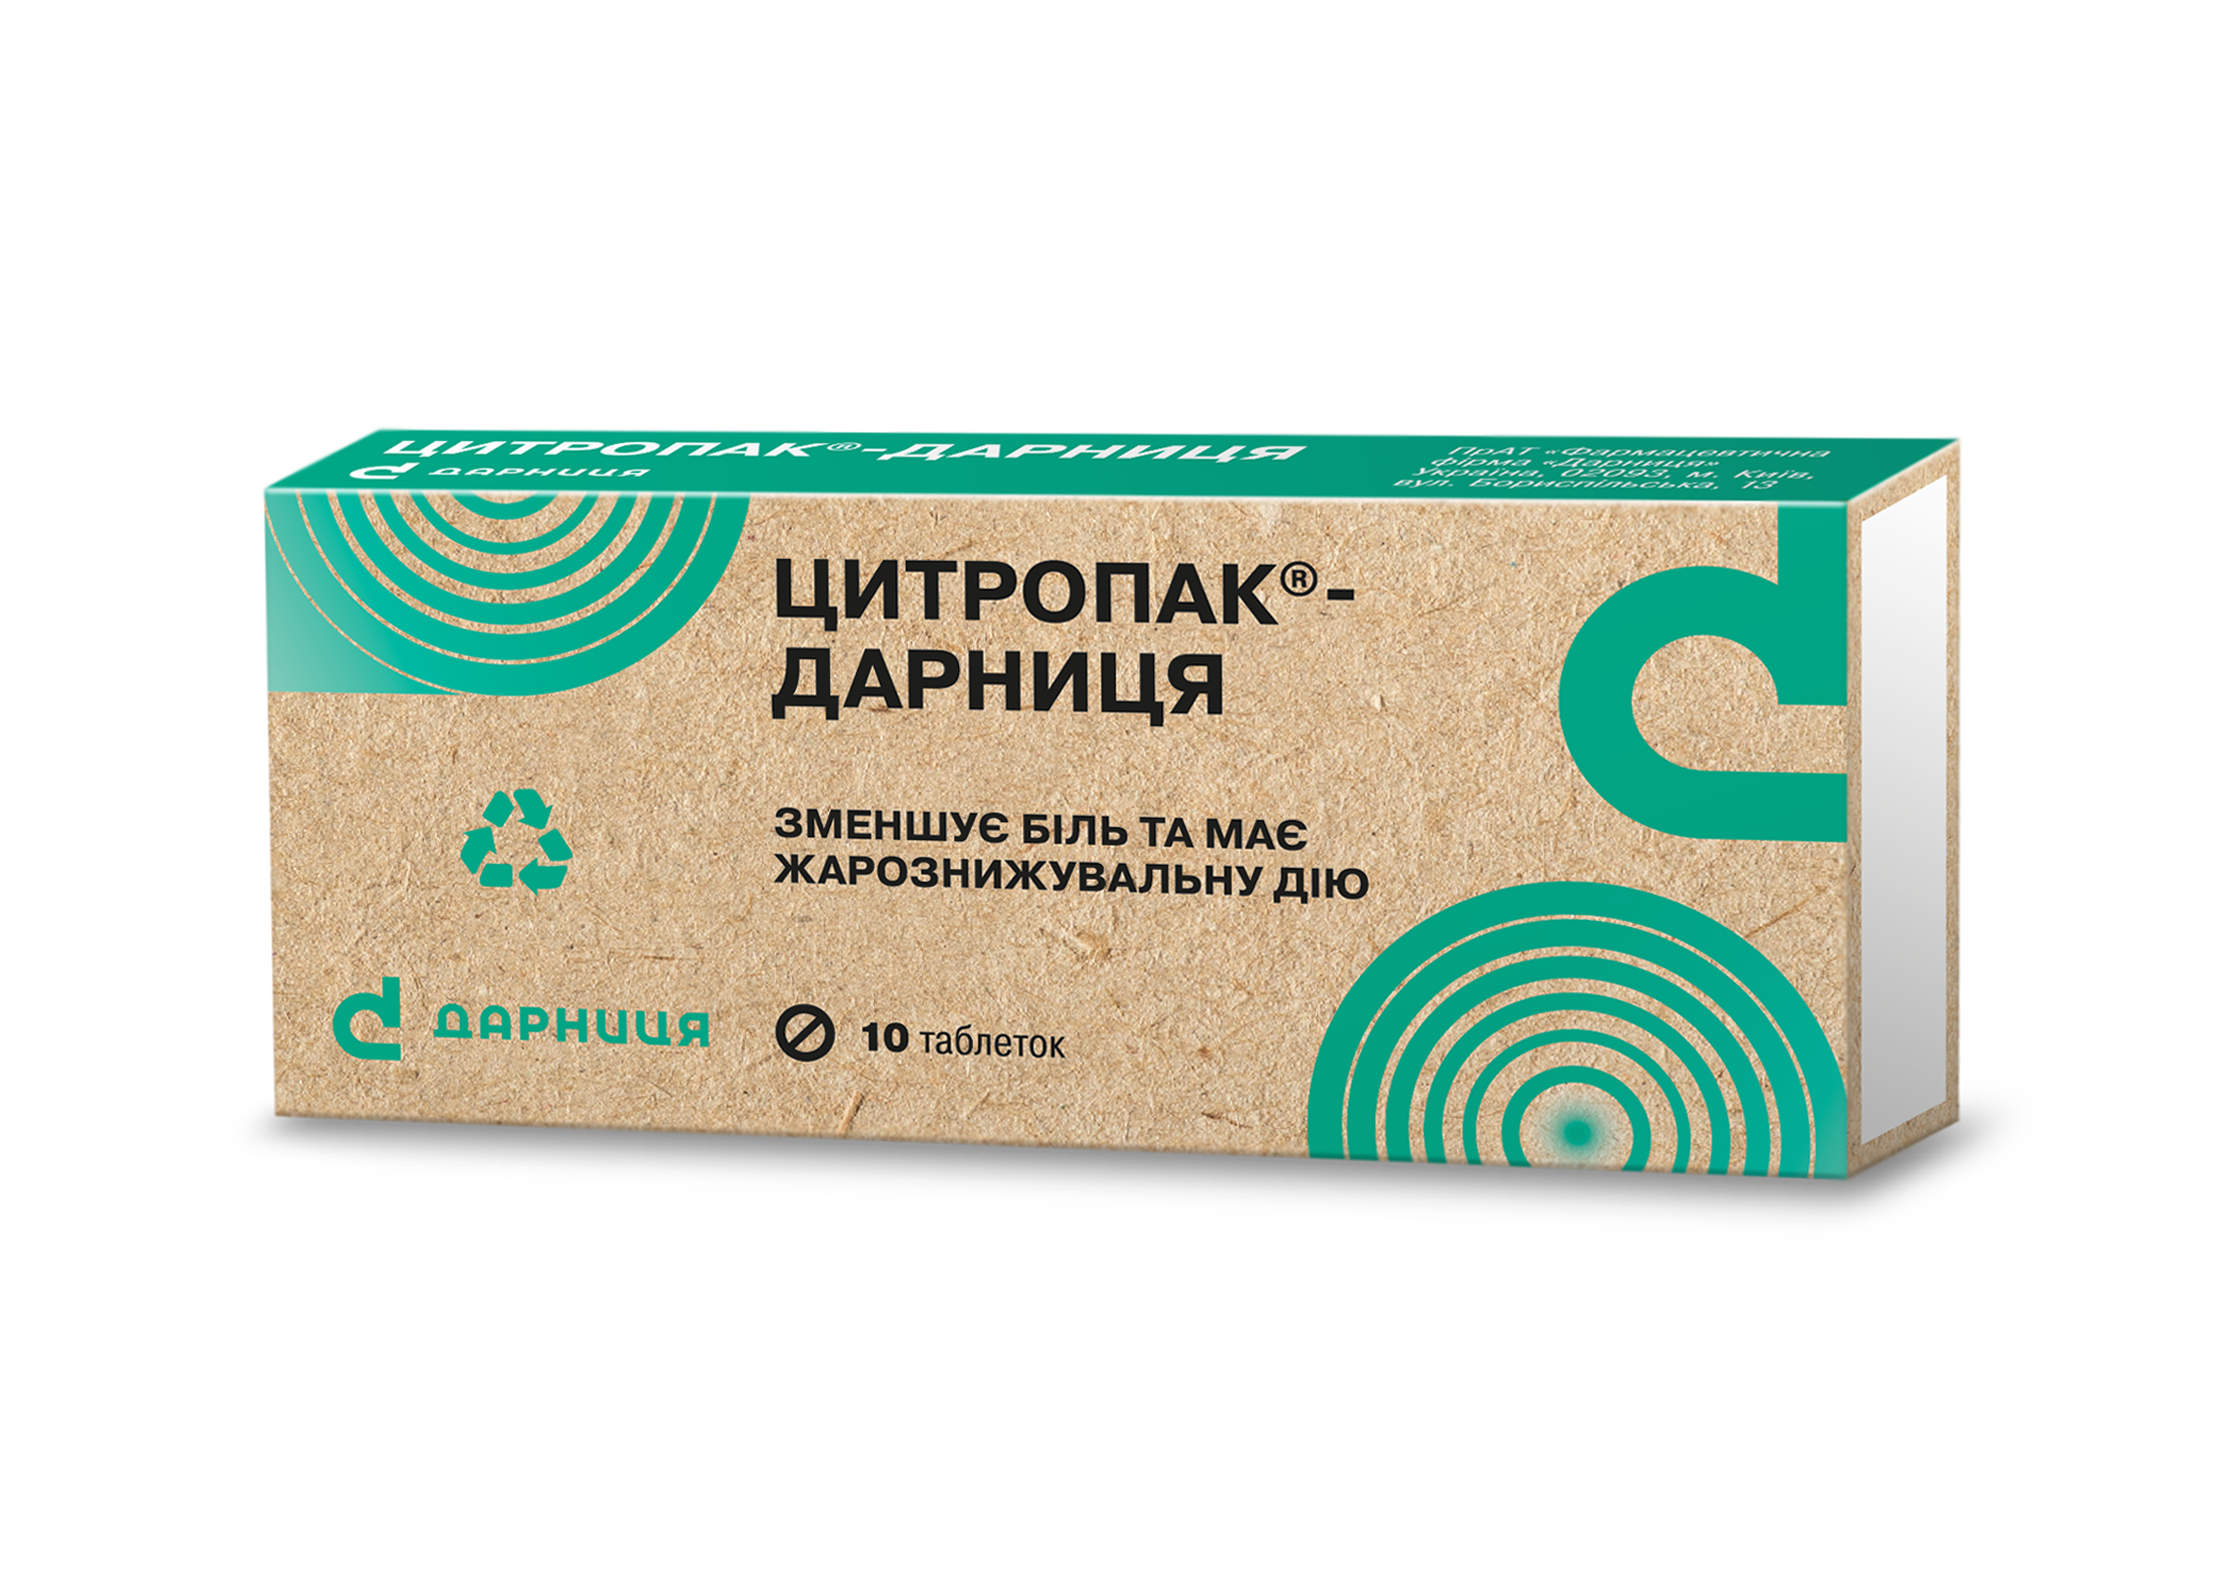 Citropak-Darnitsa - Darnitsa - Tablets